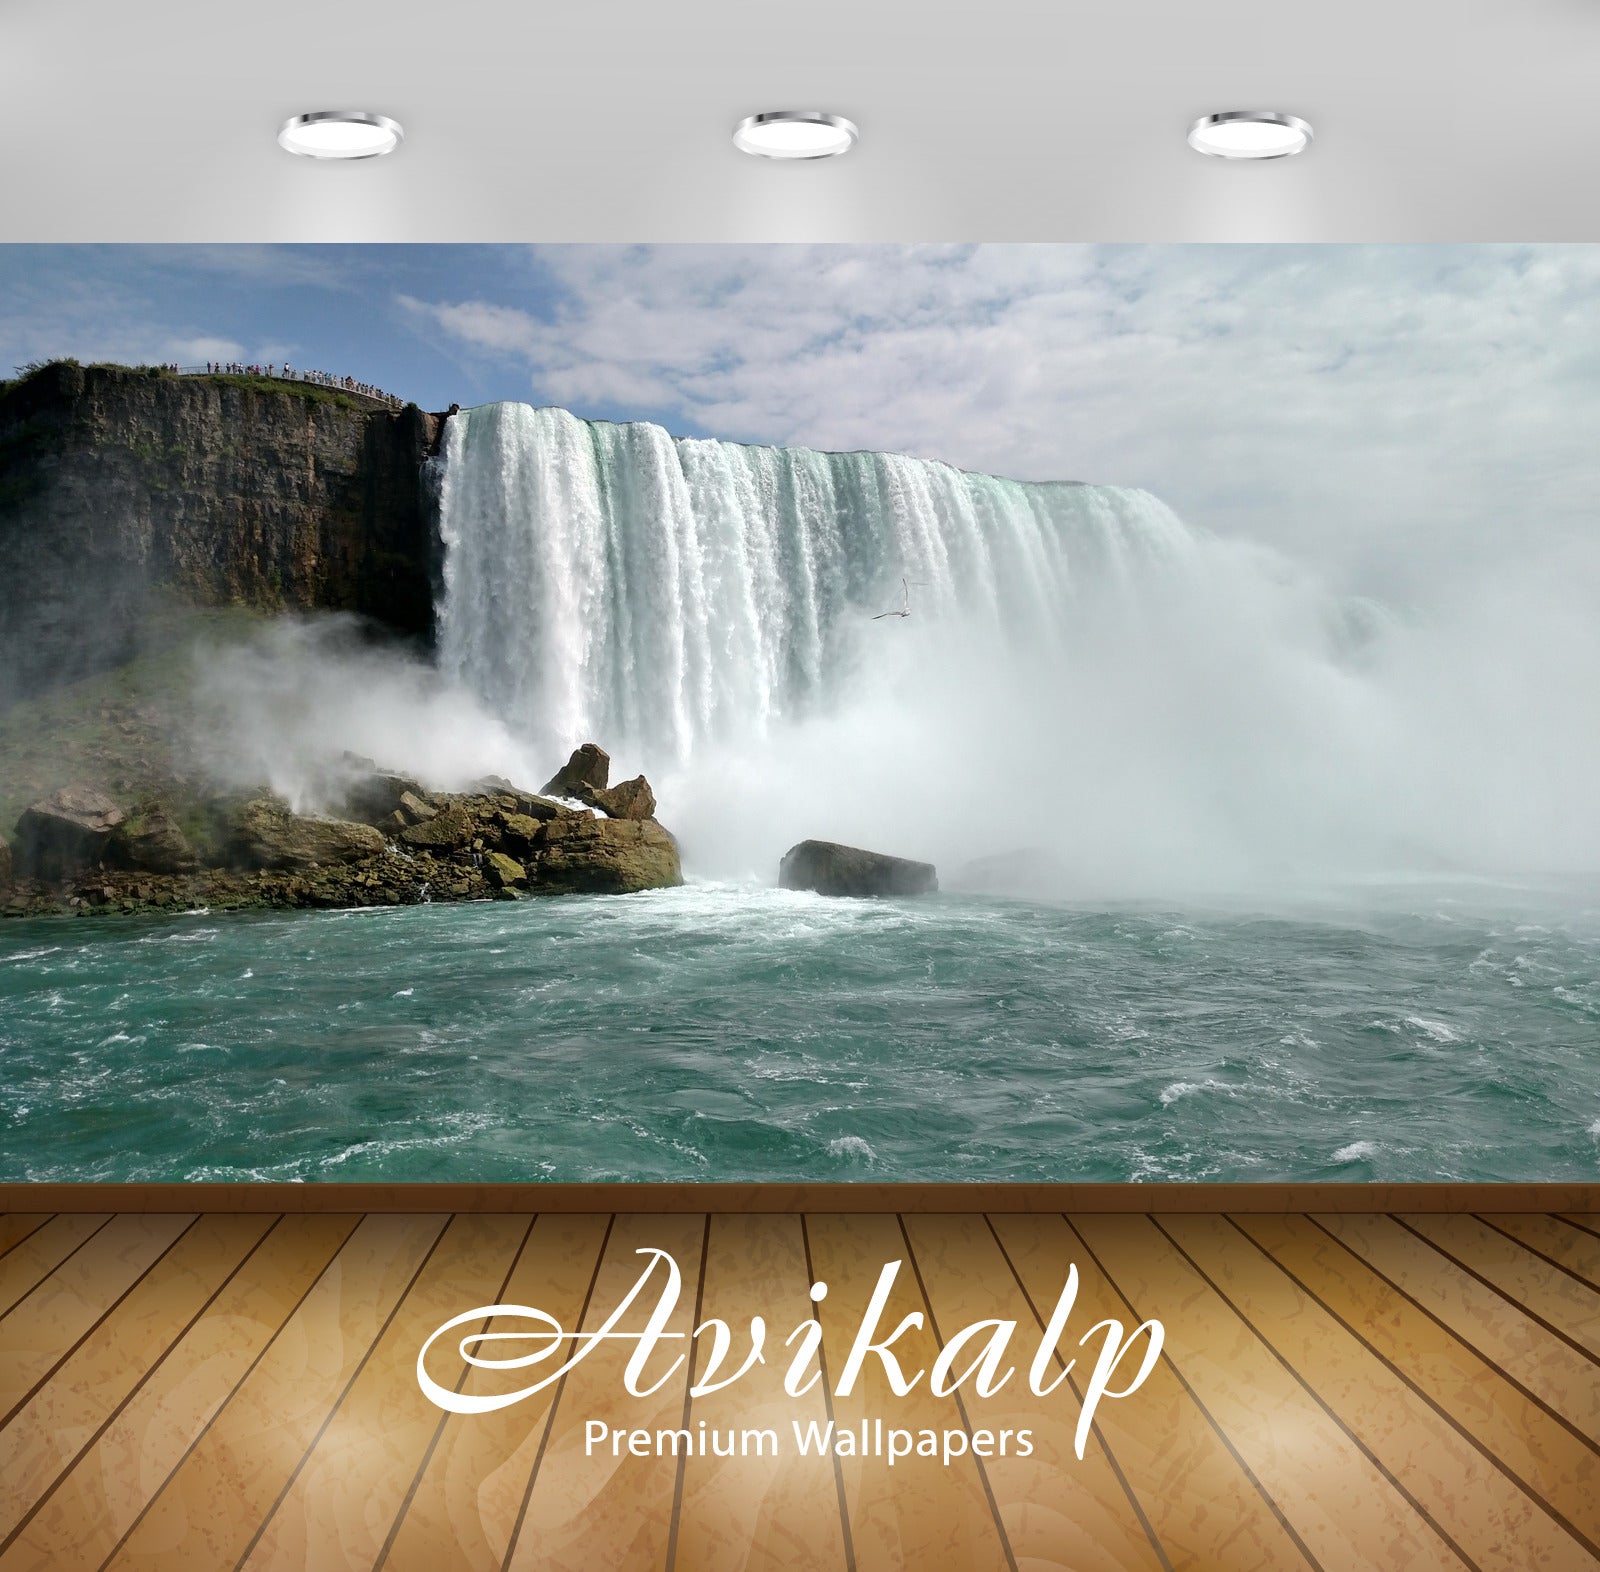 Avikalp Exclusive Awi4832 Niagara Falls Waterfall Nature Mountain Full HD Wallpapers for Living room